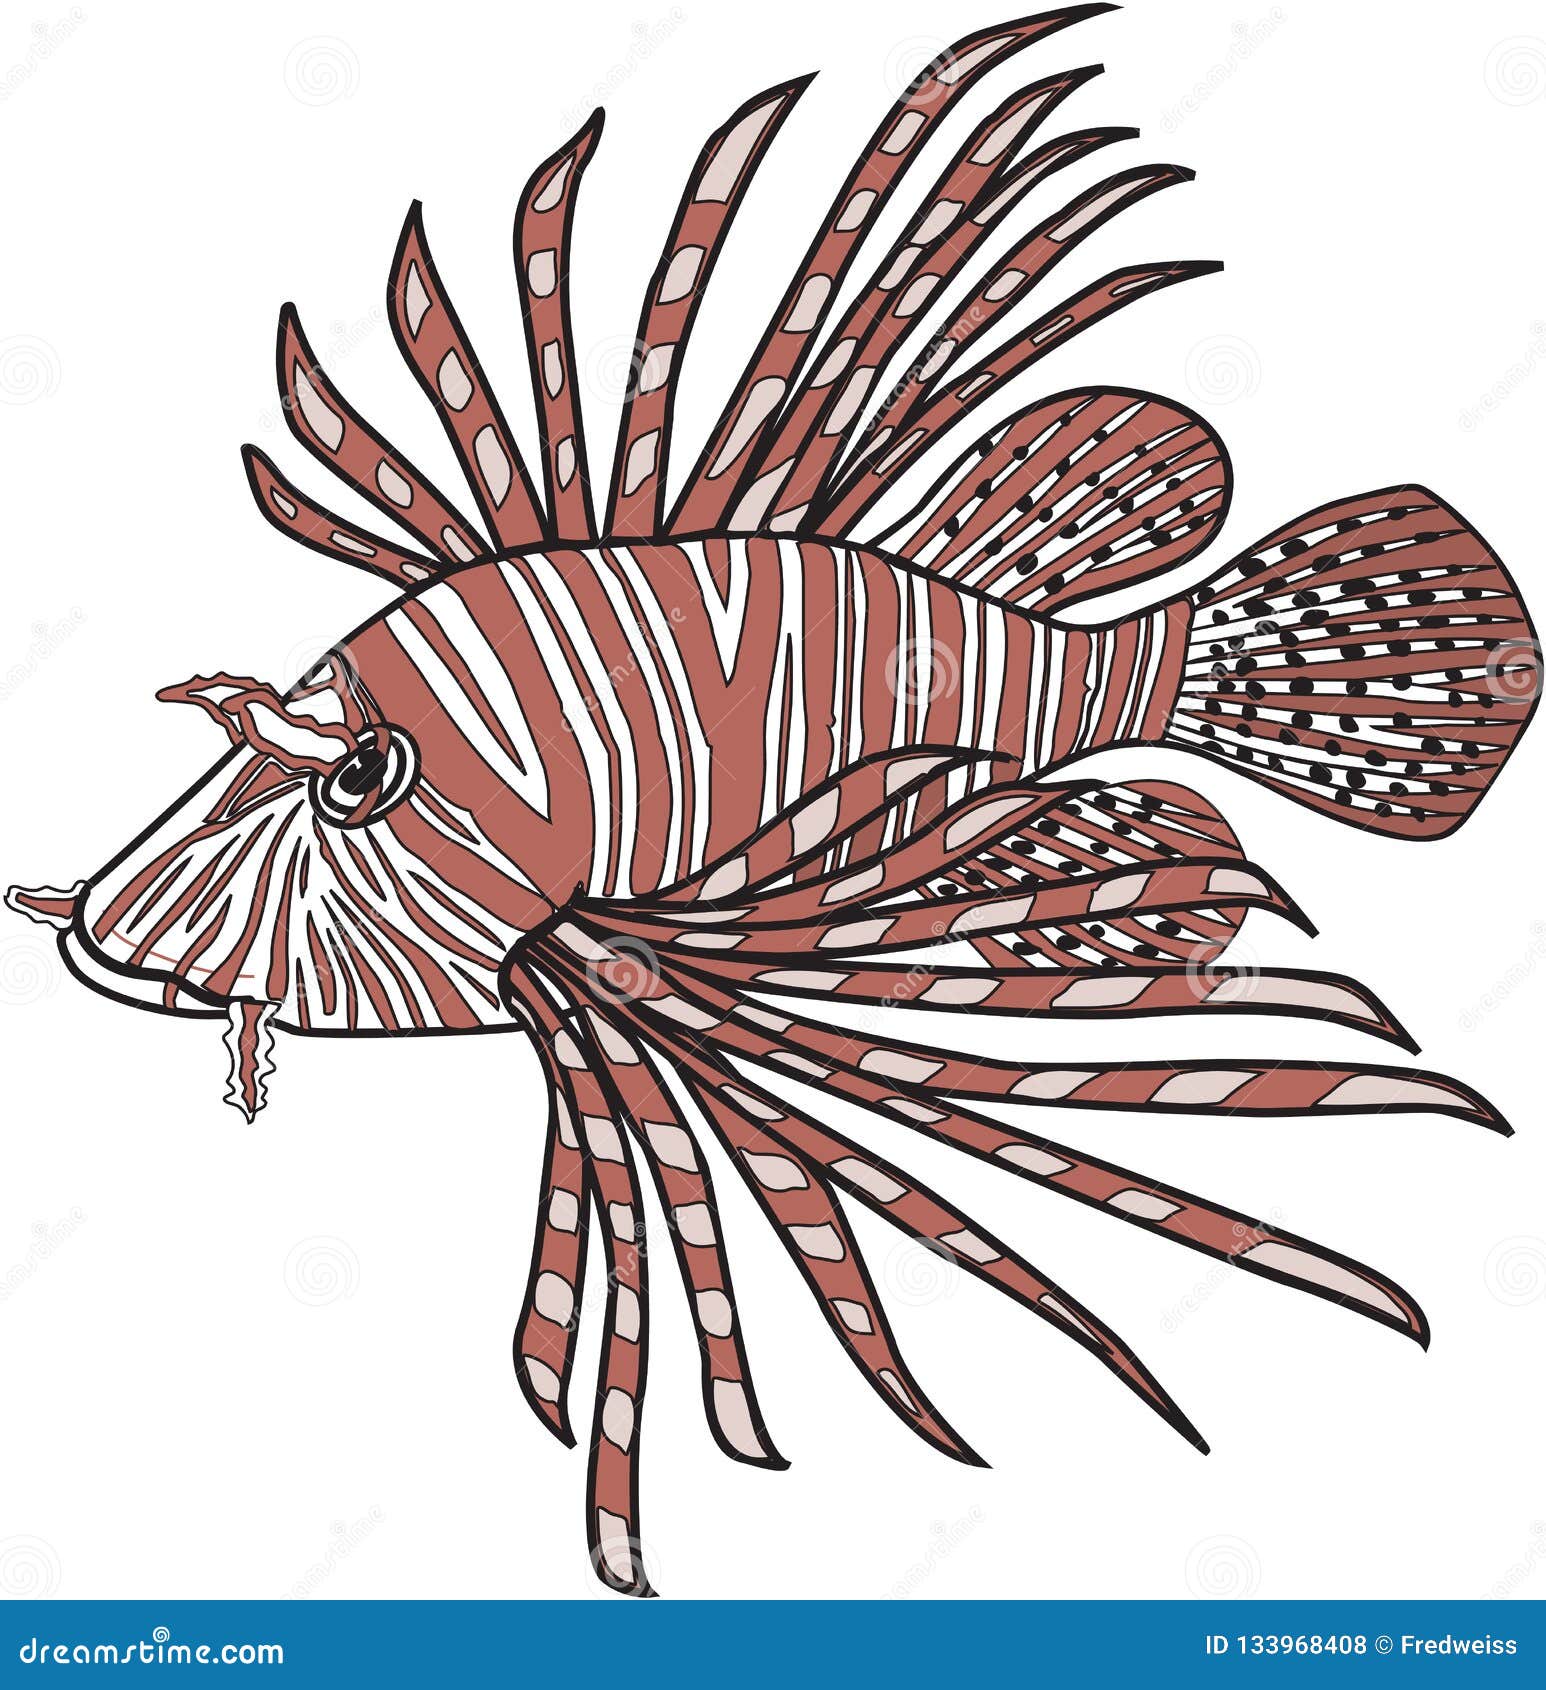 Download Lionfish Illustration stock vector. Illustration of venomous - 133968408